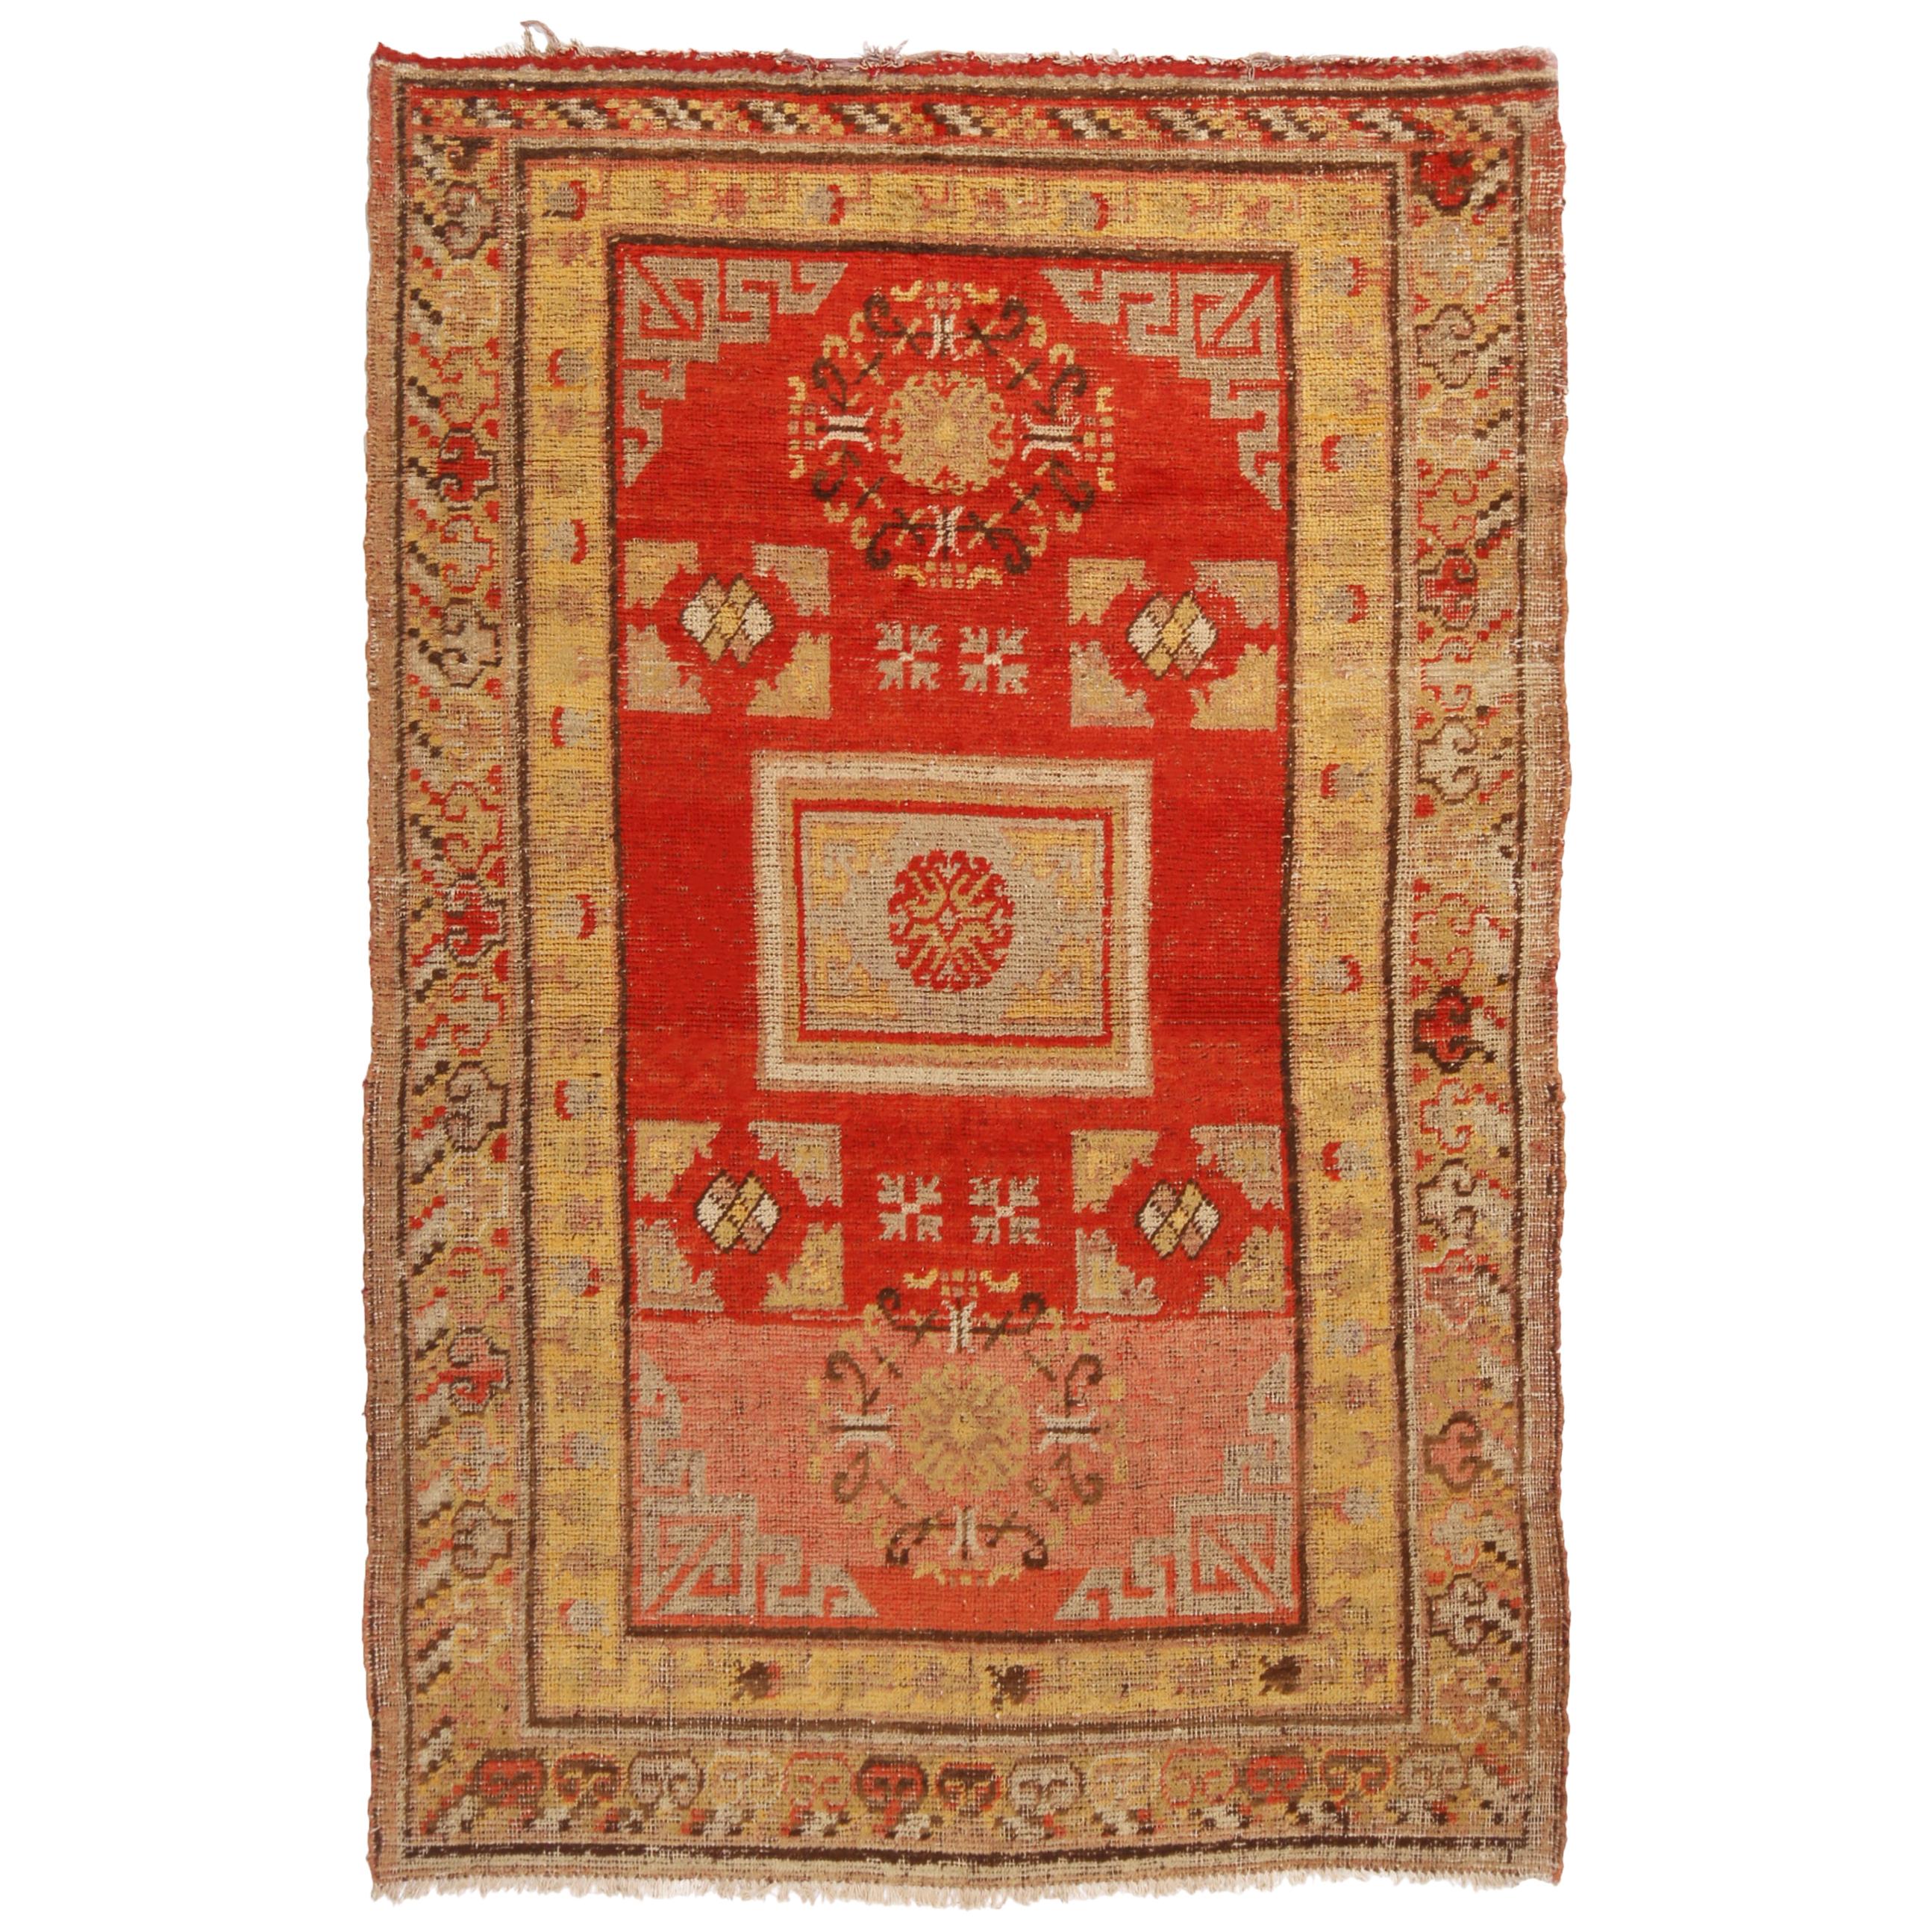 Antique Khotan Transitional Red and Golden Beige Wool Rug